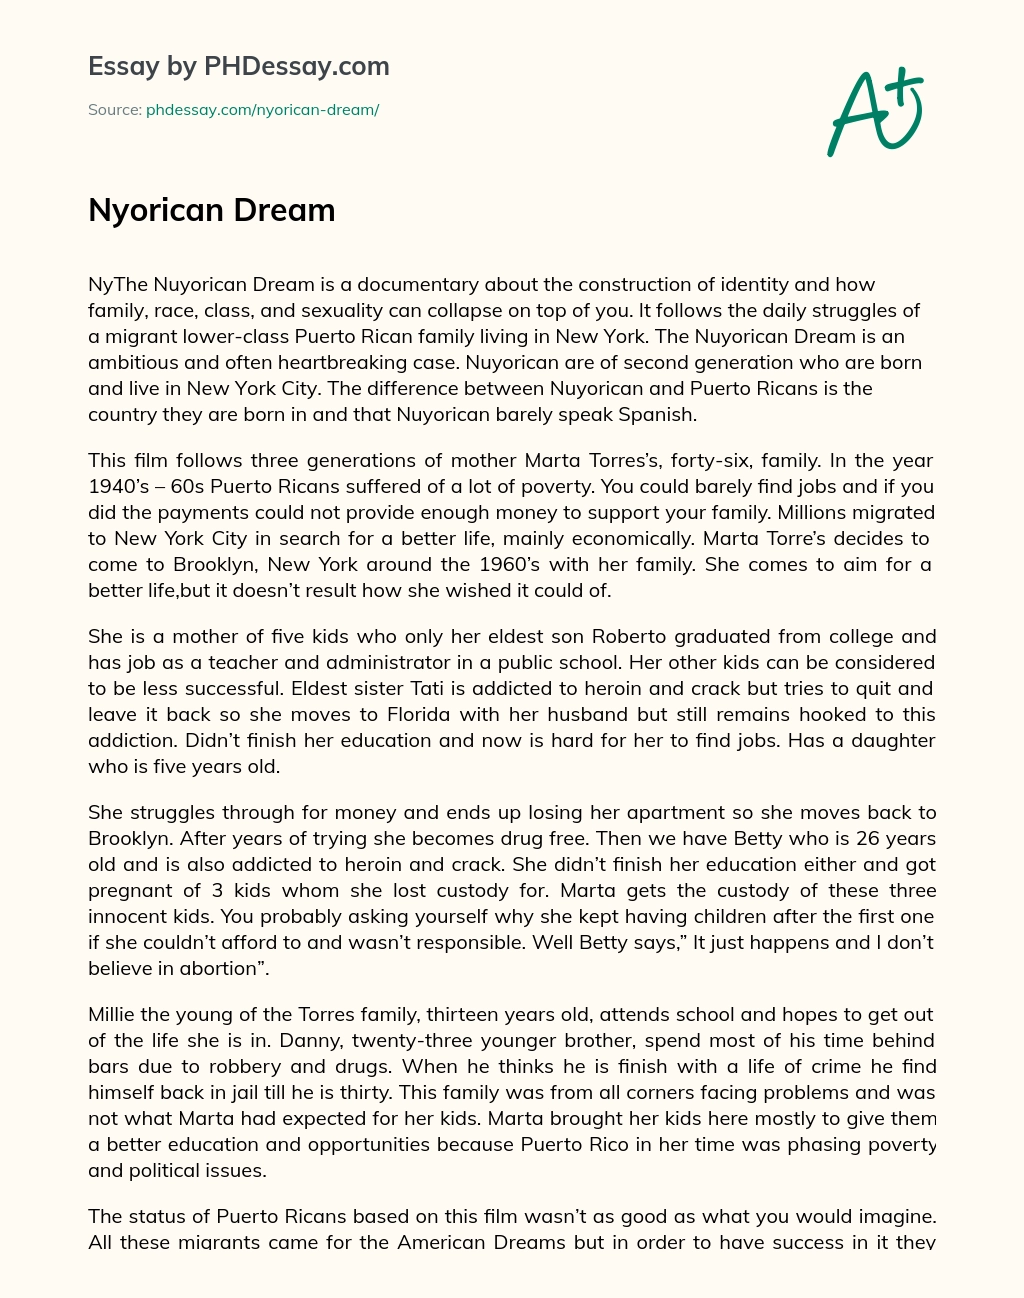 Nyorican Dream essay